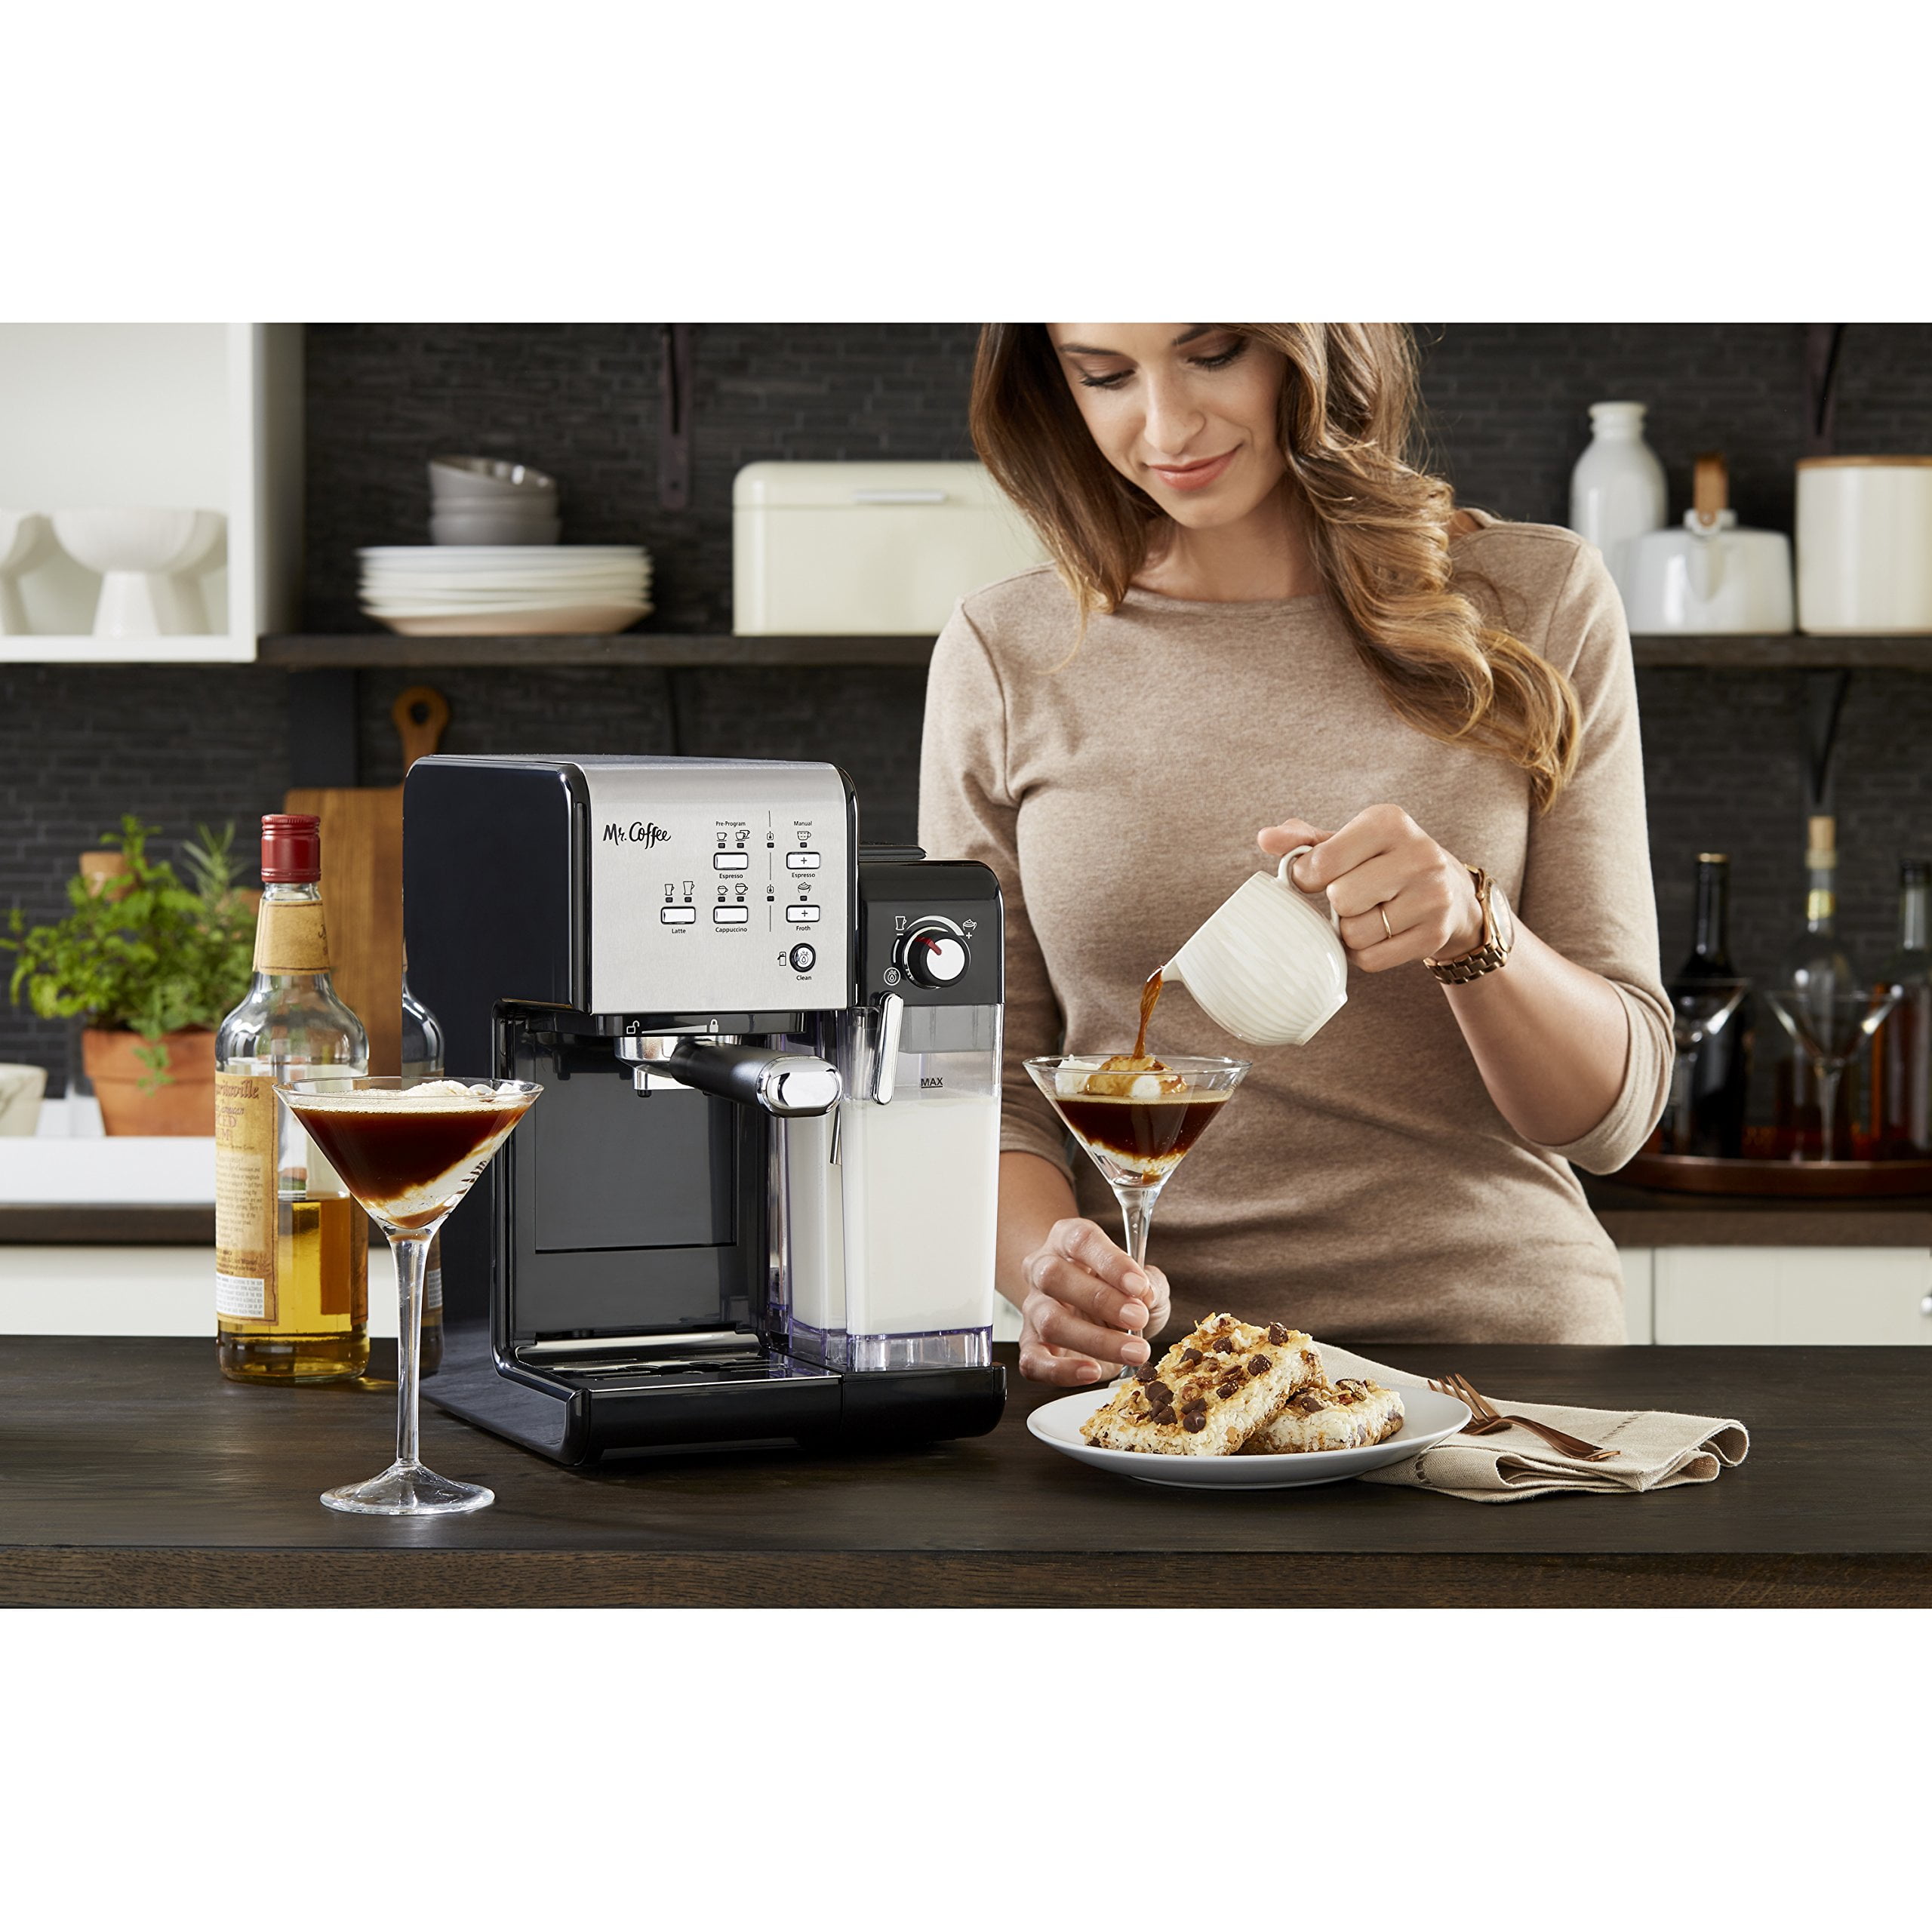 Mr. Coffee New One-Touch CoffeeHouse Espresso, Cappuccino, and Latte Maker,  White